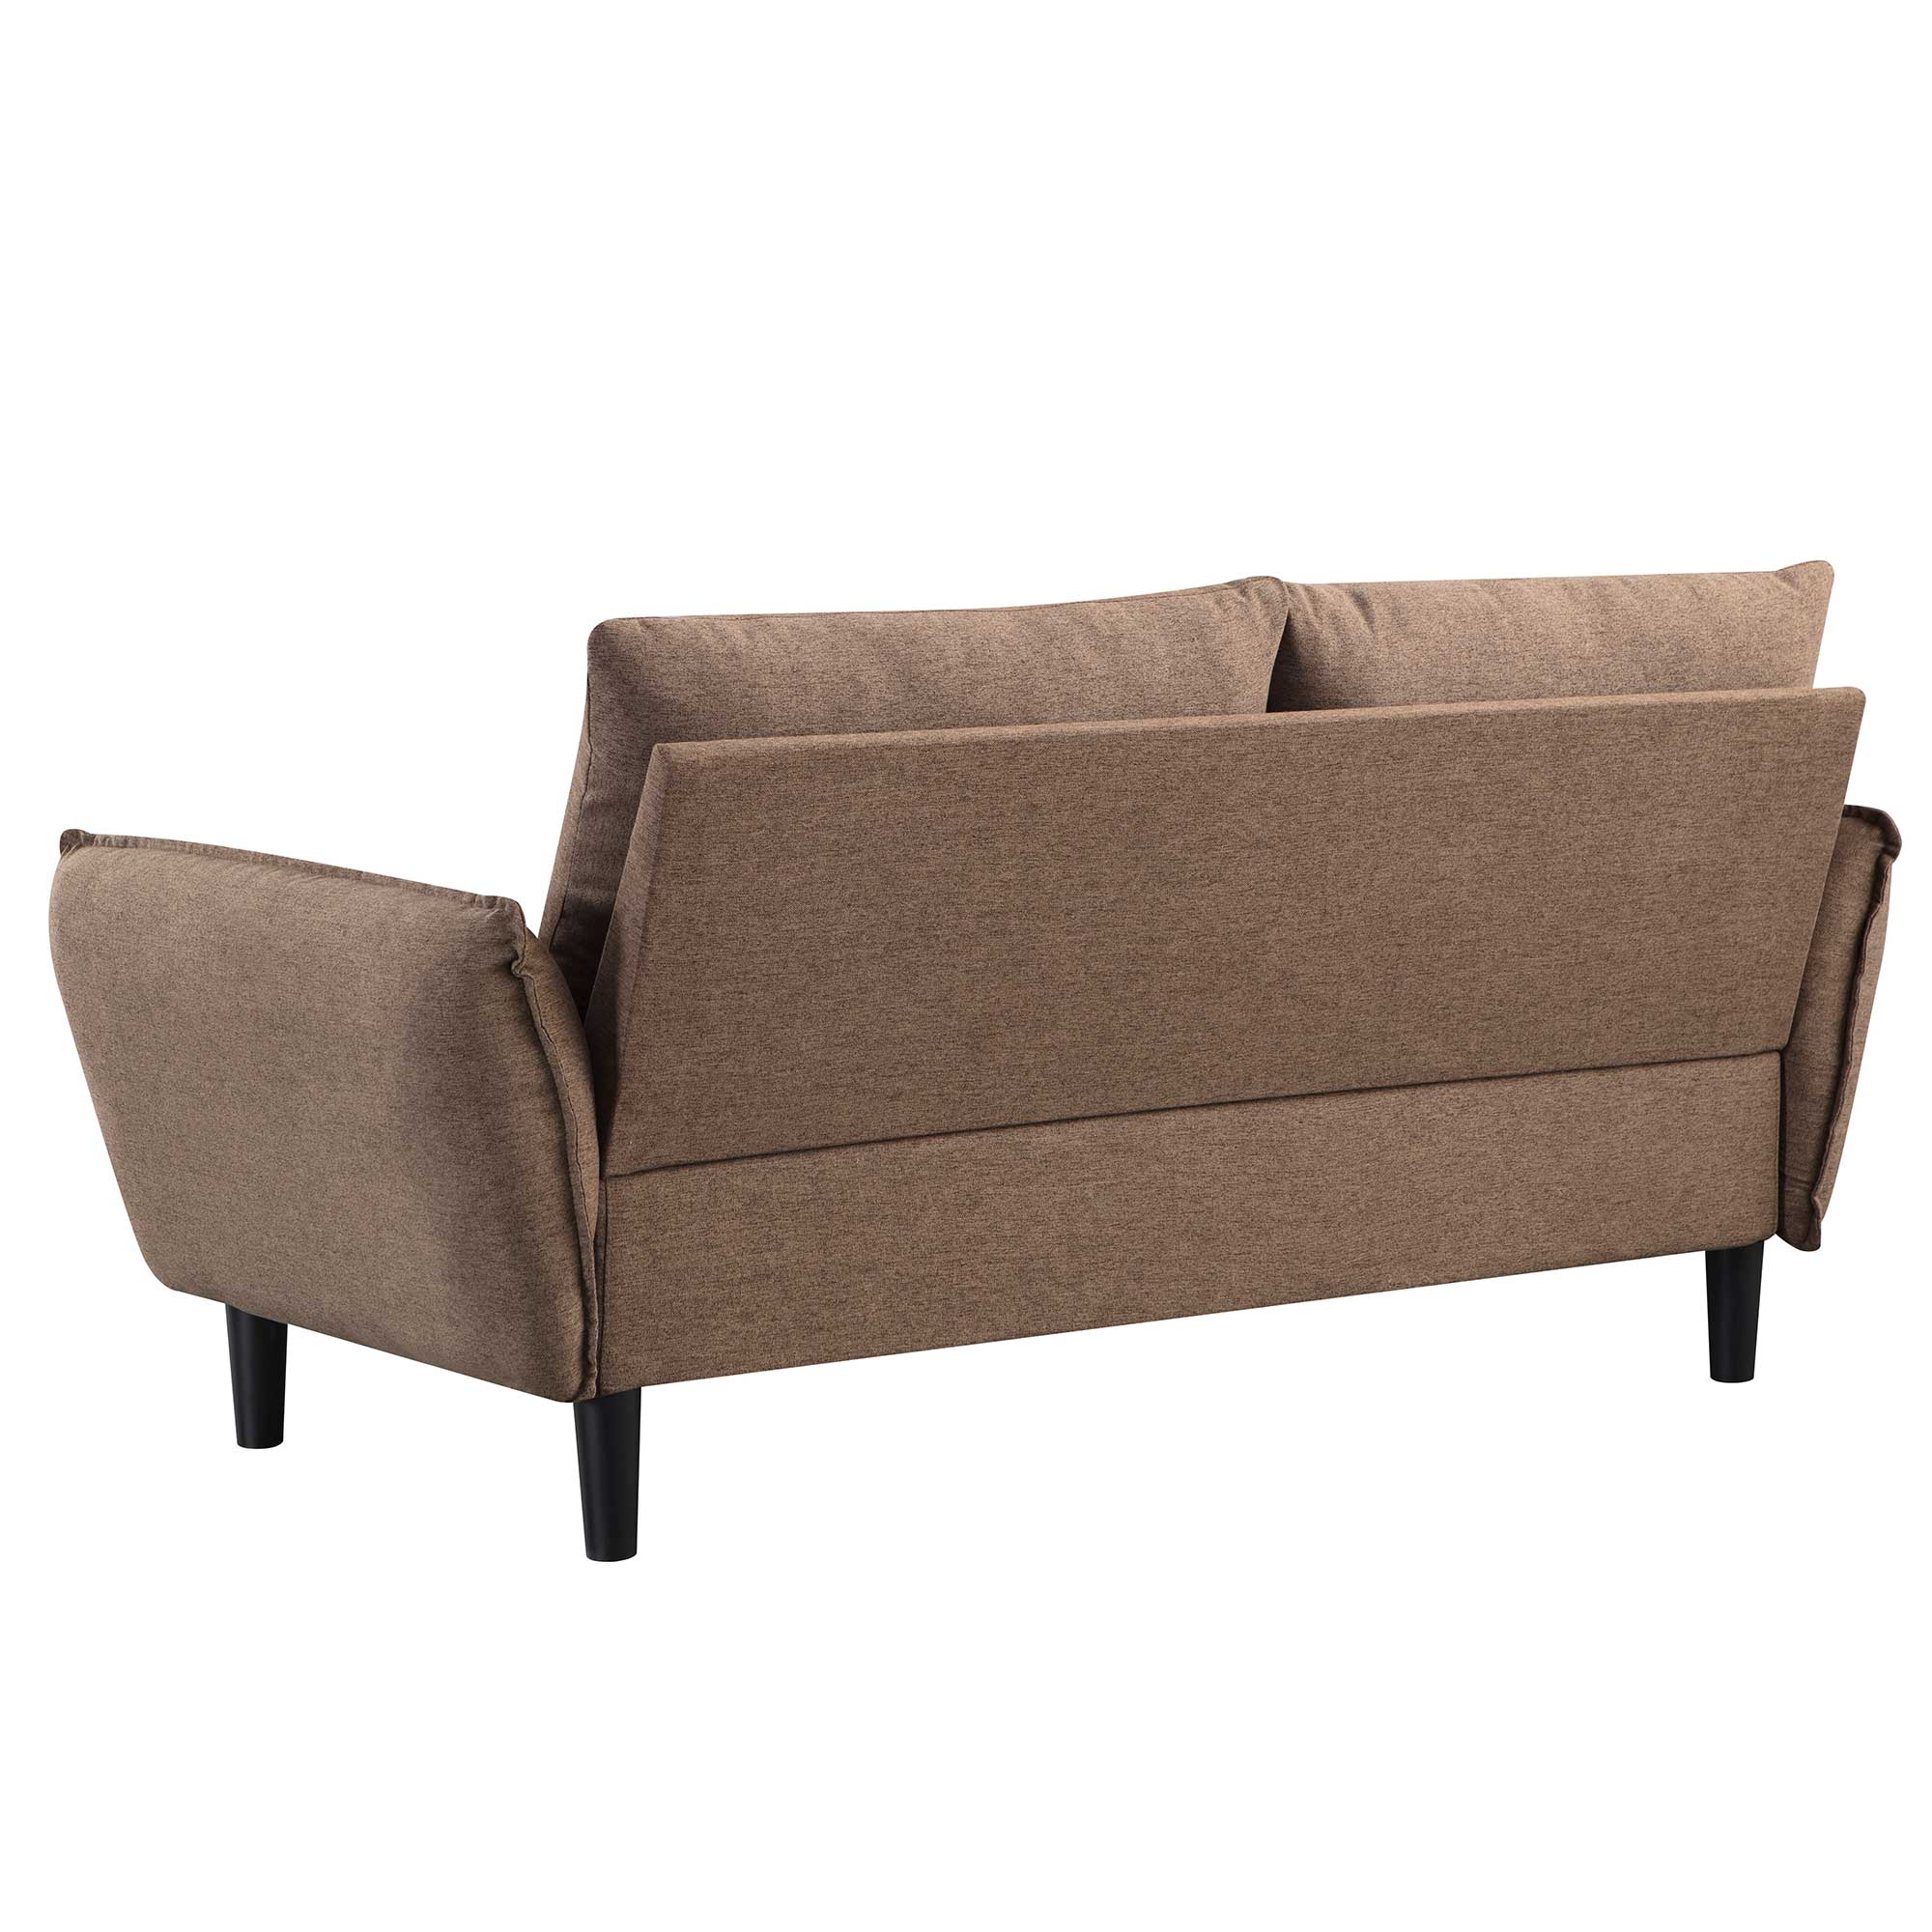 RaDEWAY Modern Sofa for Living Room